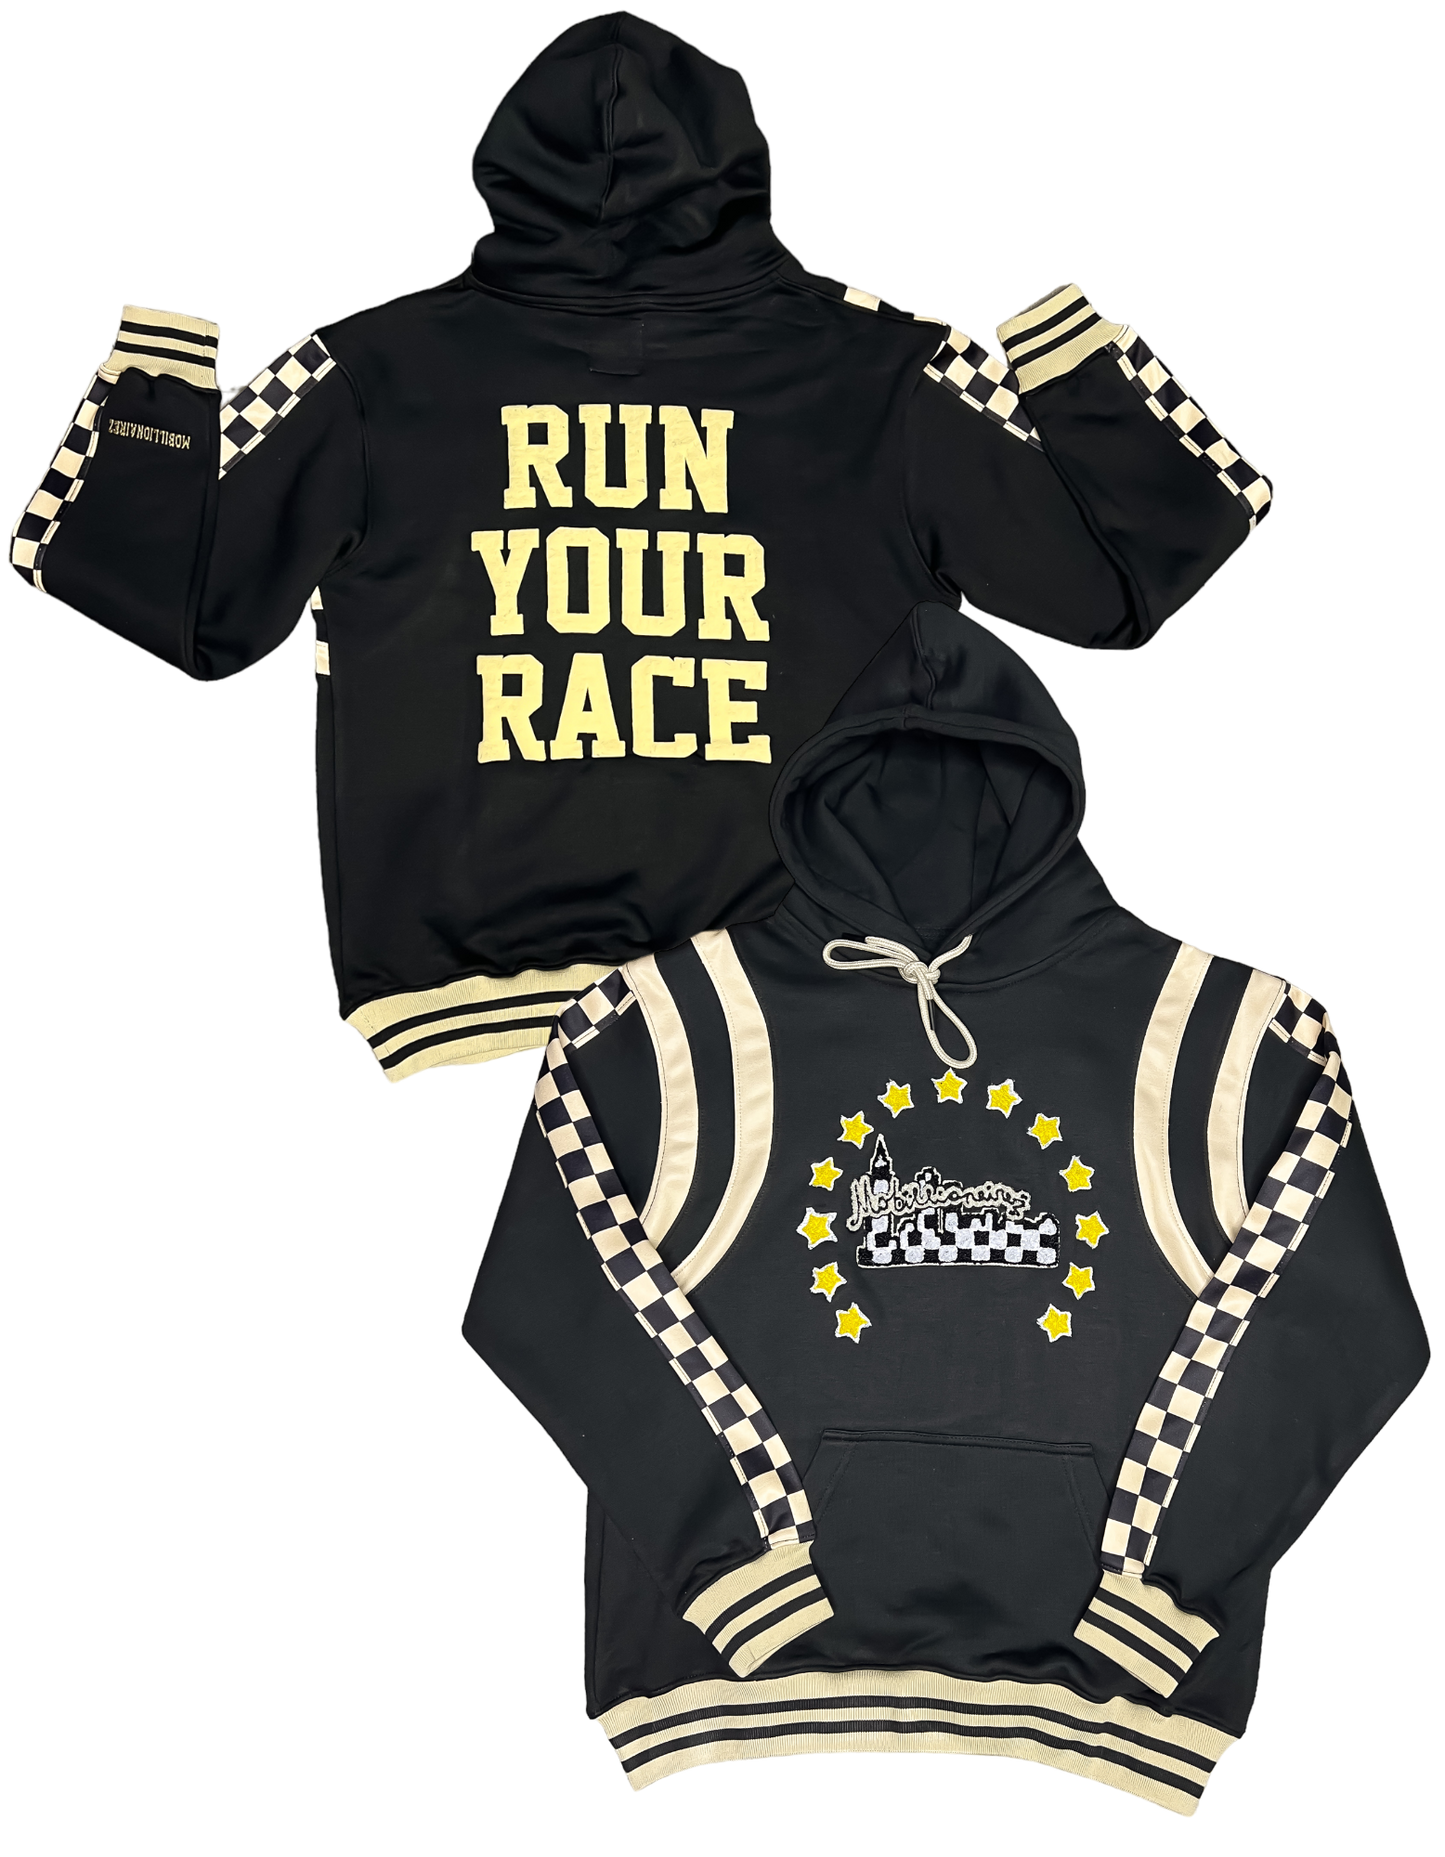 Mobillionairez - "Run Your Own Race" Hoodie (Unisex)